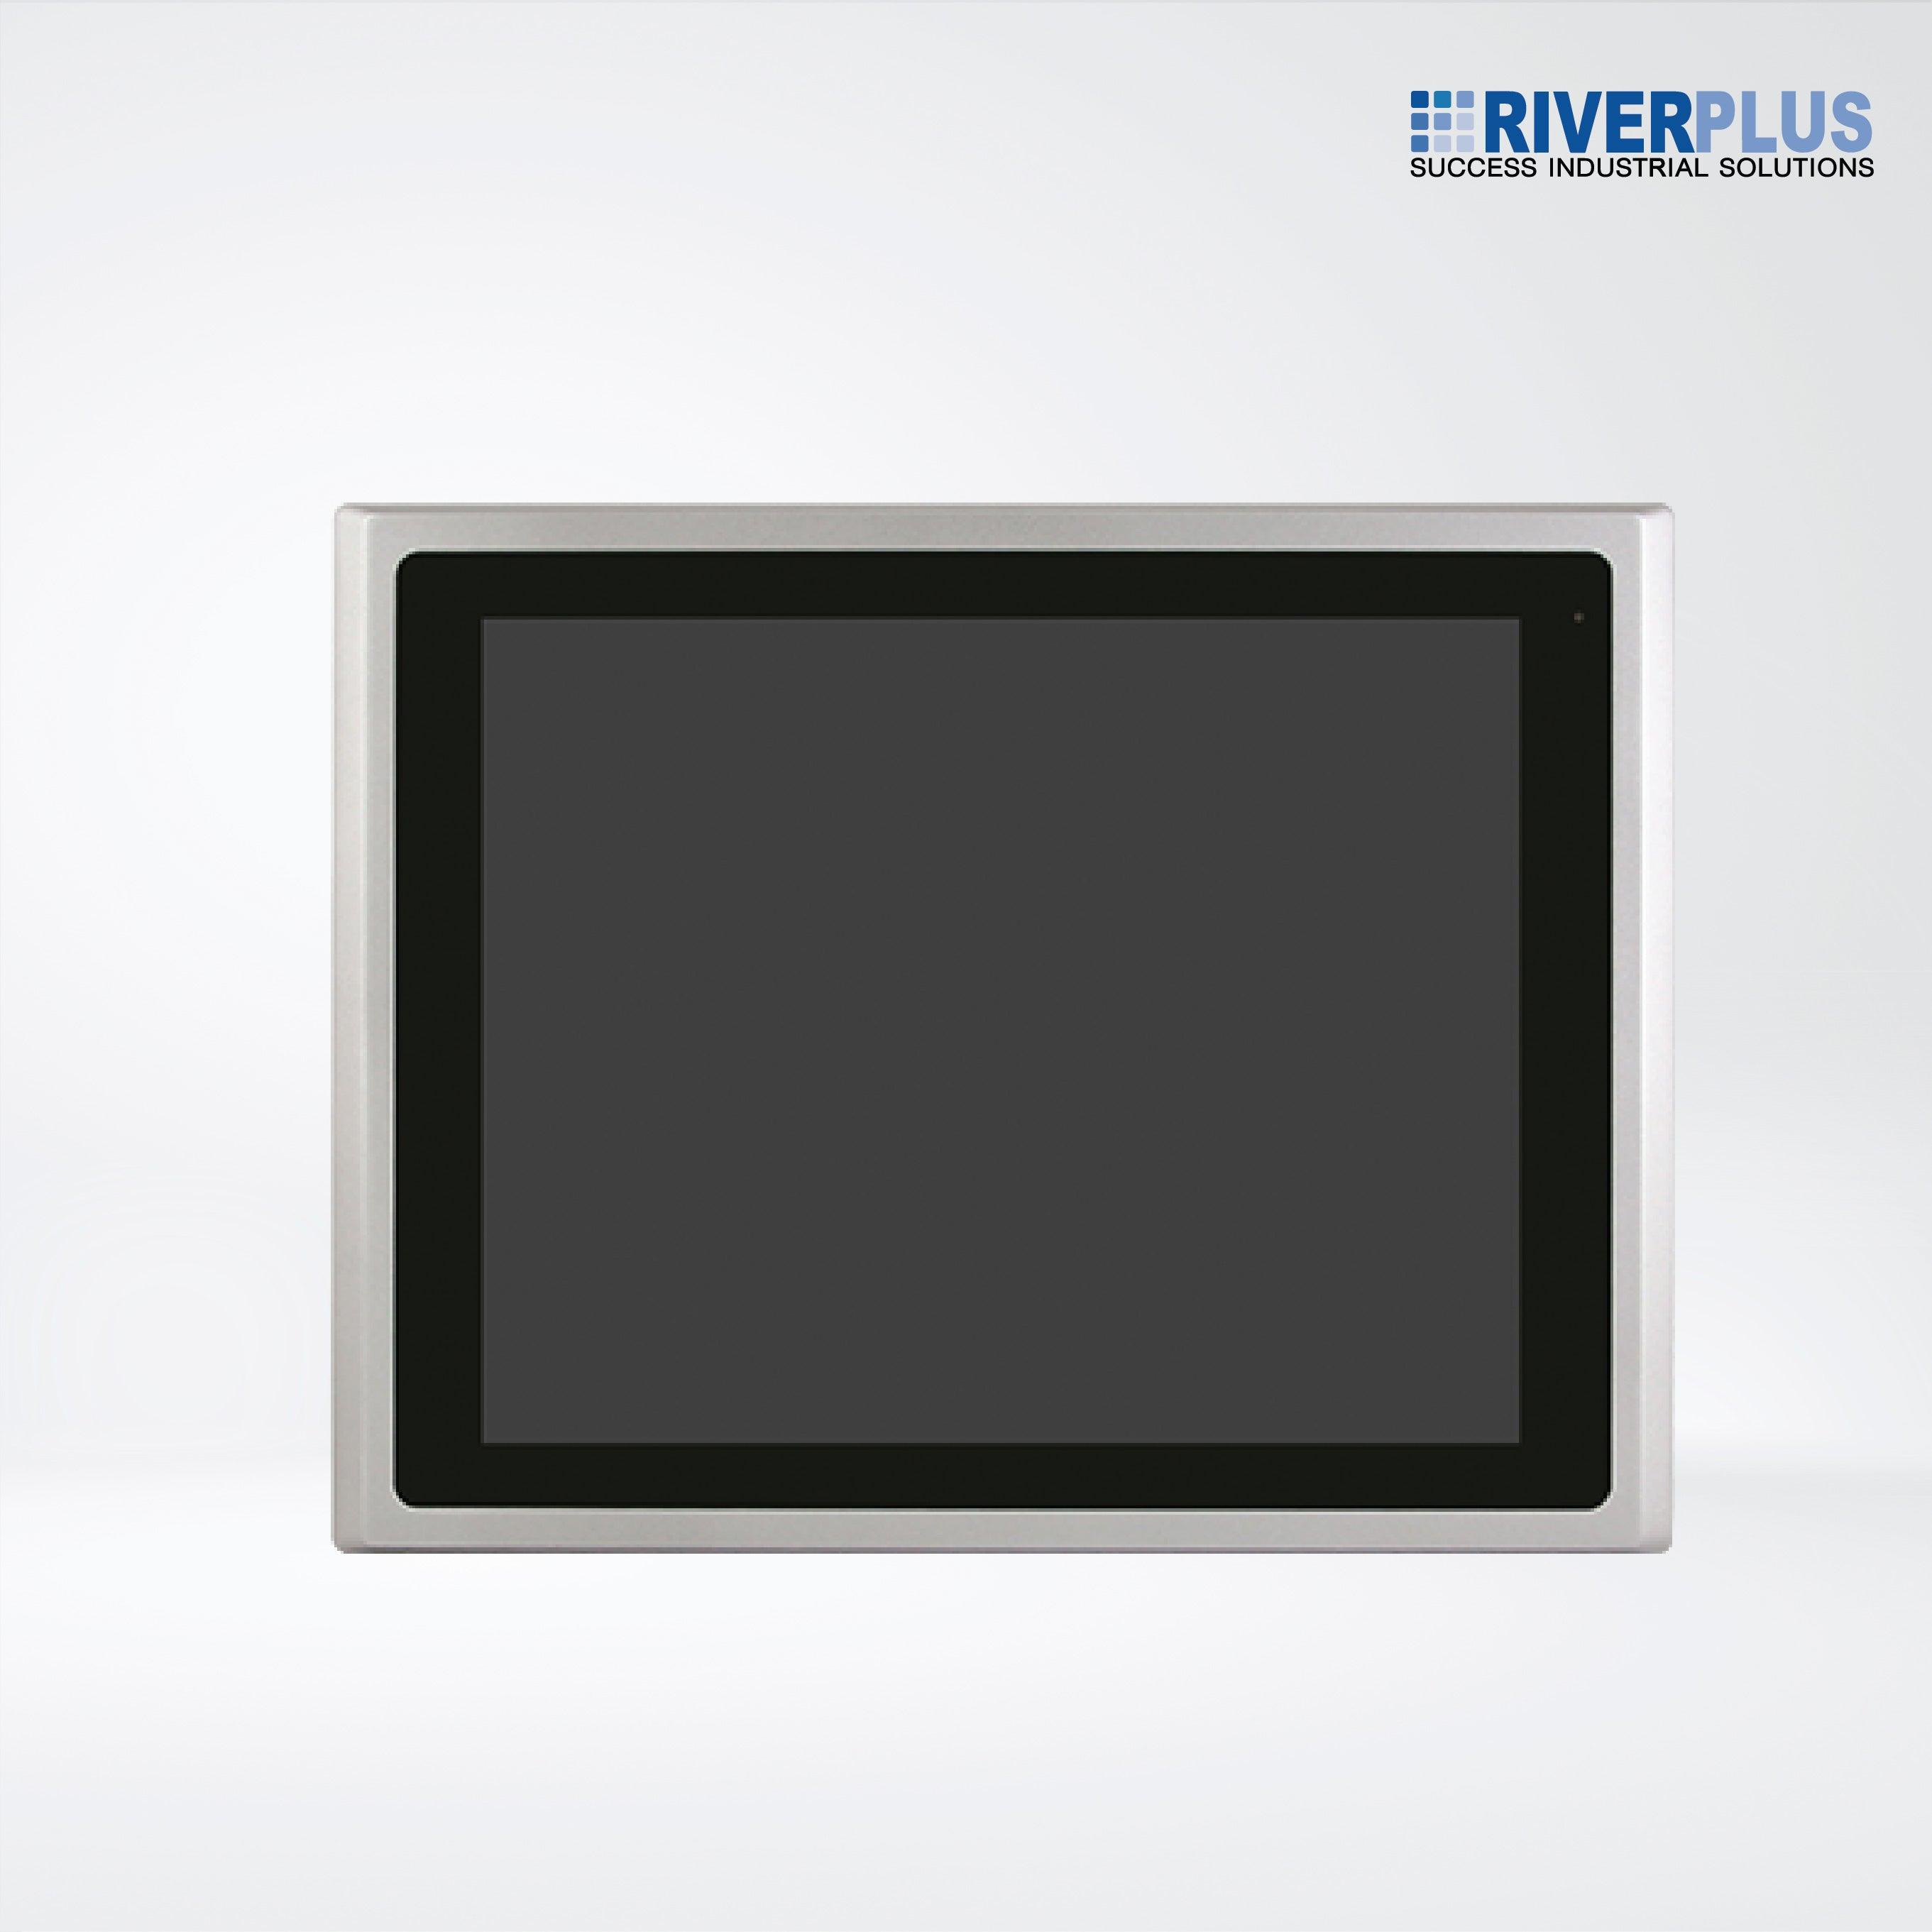 ARCHMI-817PH 17" Intel Celeron N2930/ Atom E3845, Fanless Industrial Compact Size Panel PC - Riverplus